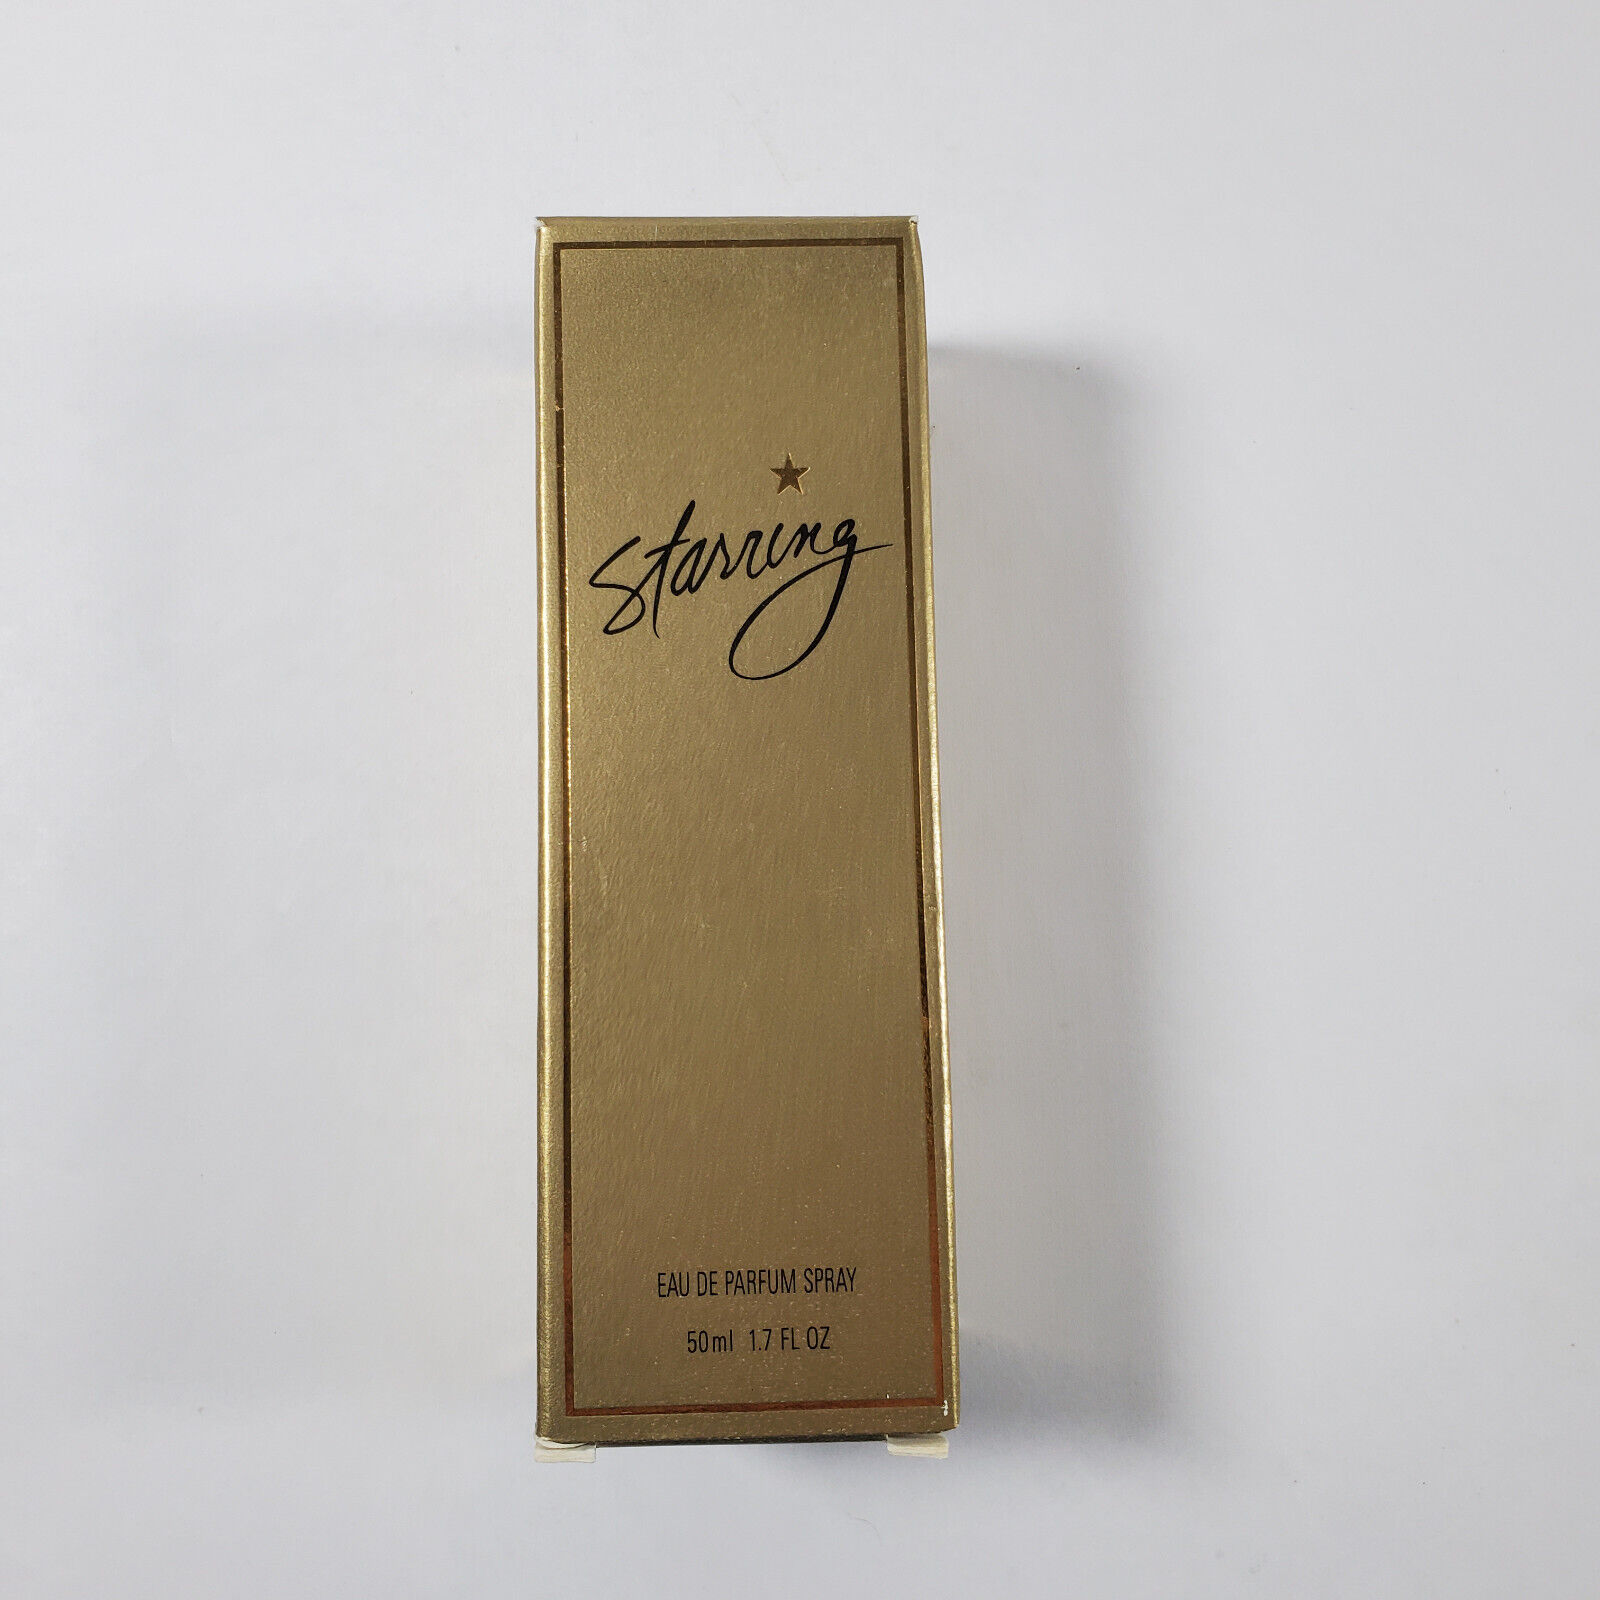 Avon Starring Eau De Parfum Spray 1.7 fl oz 50ml New Old Stock NOS